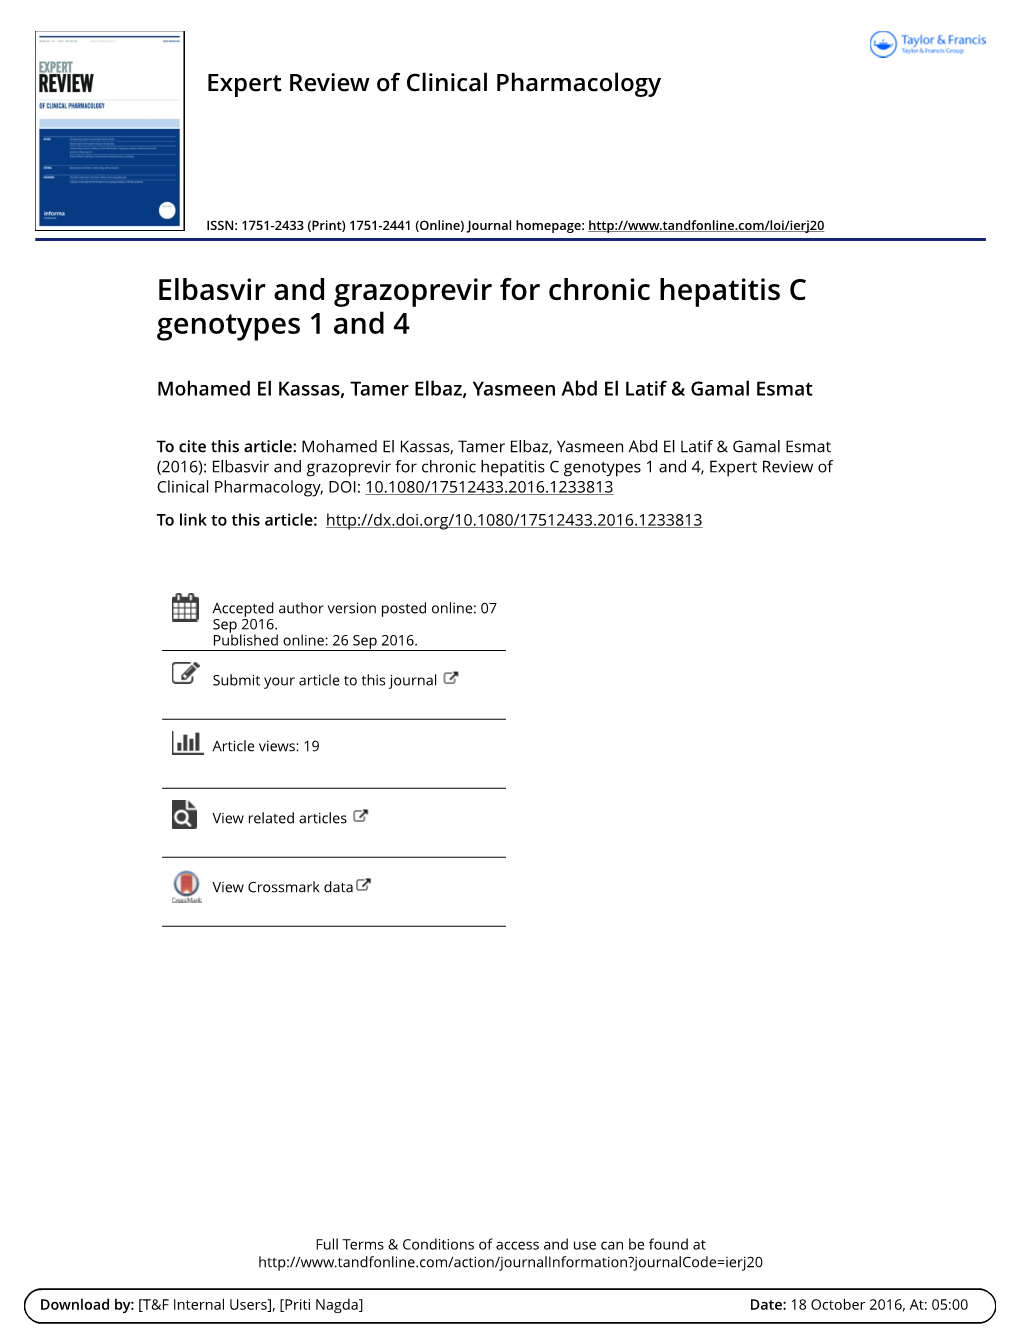 Elbasvir and Grazoprevir for Chronic Hepatitis C Genotypes 1 and 4